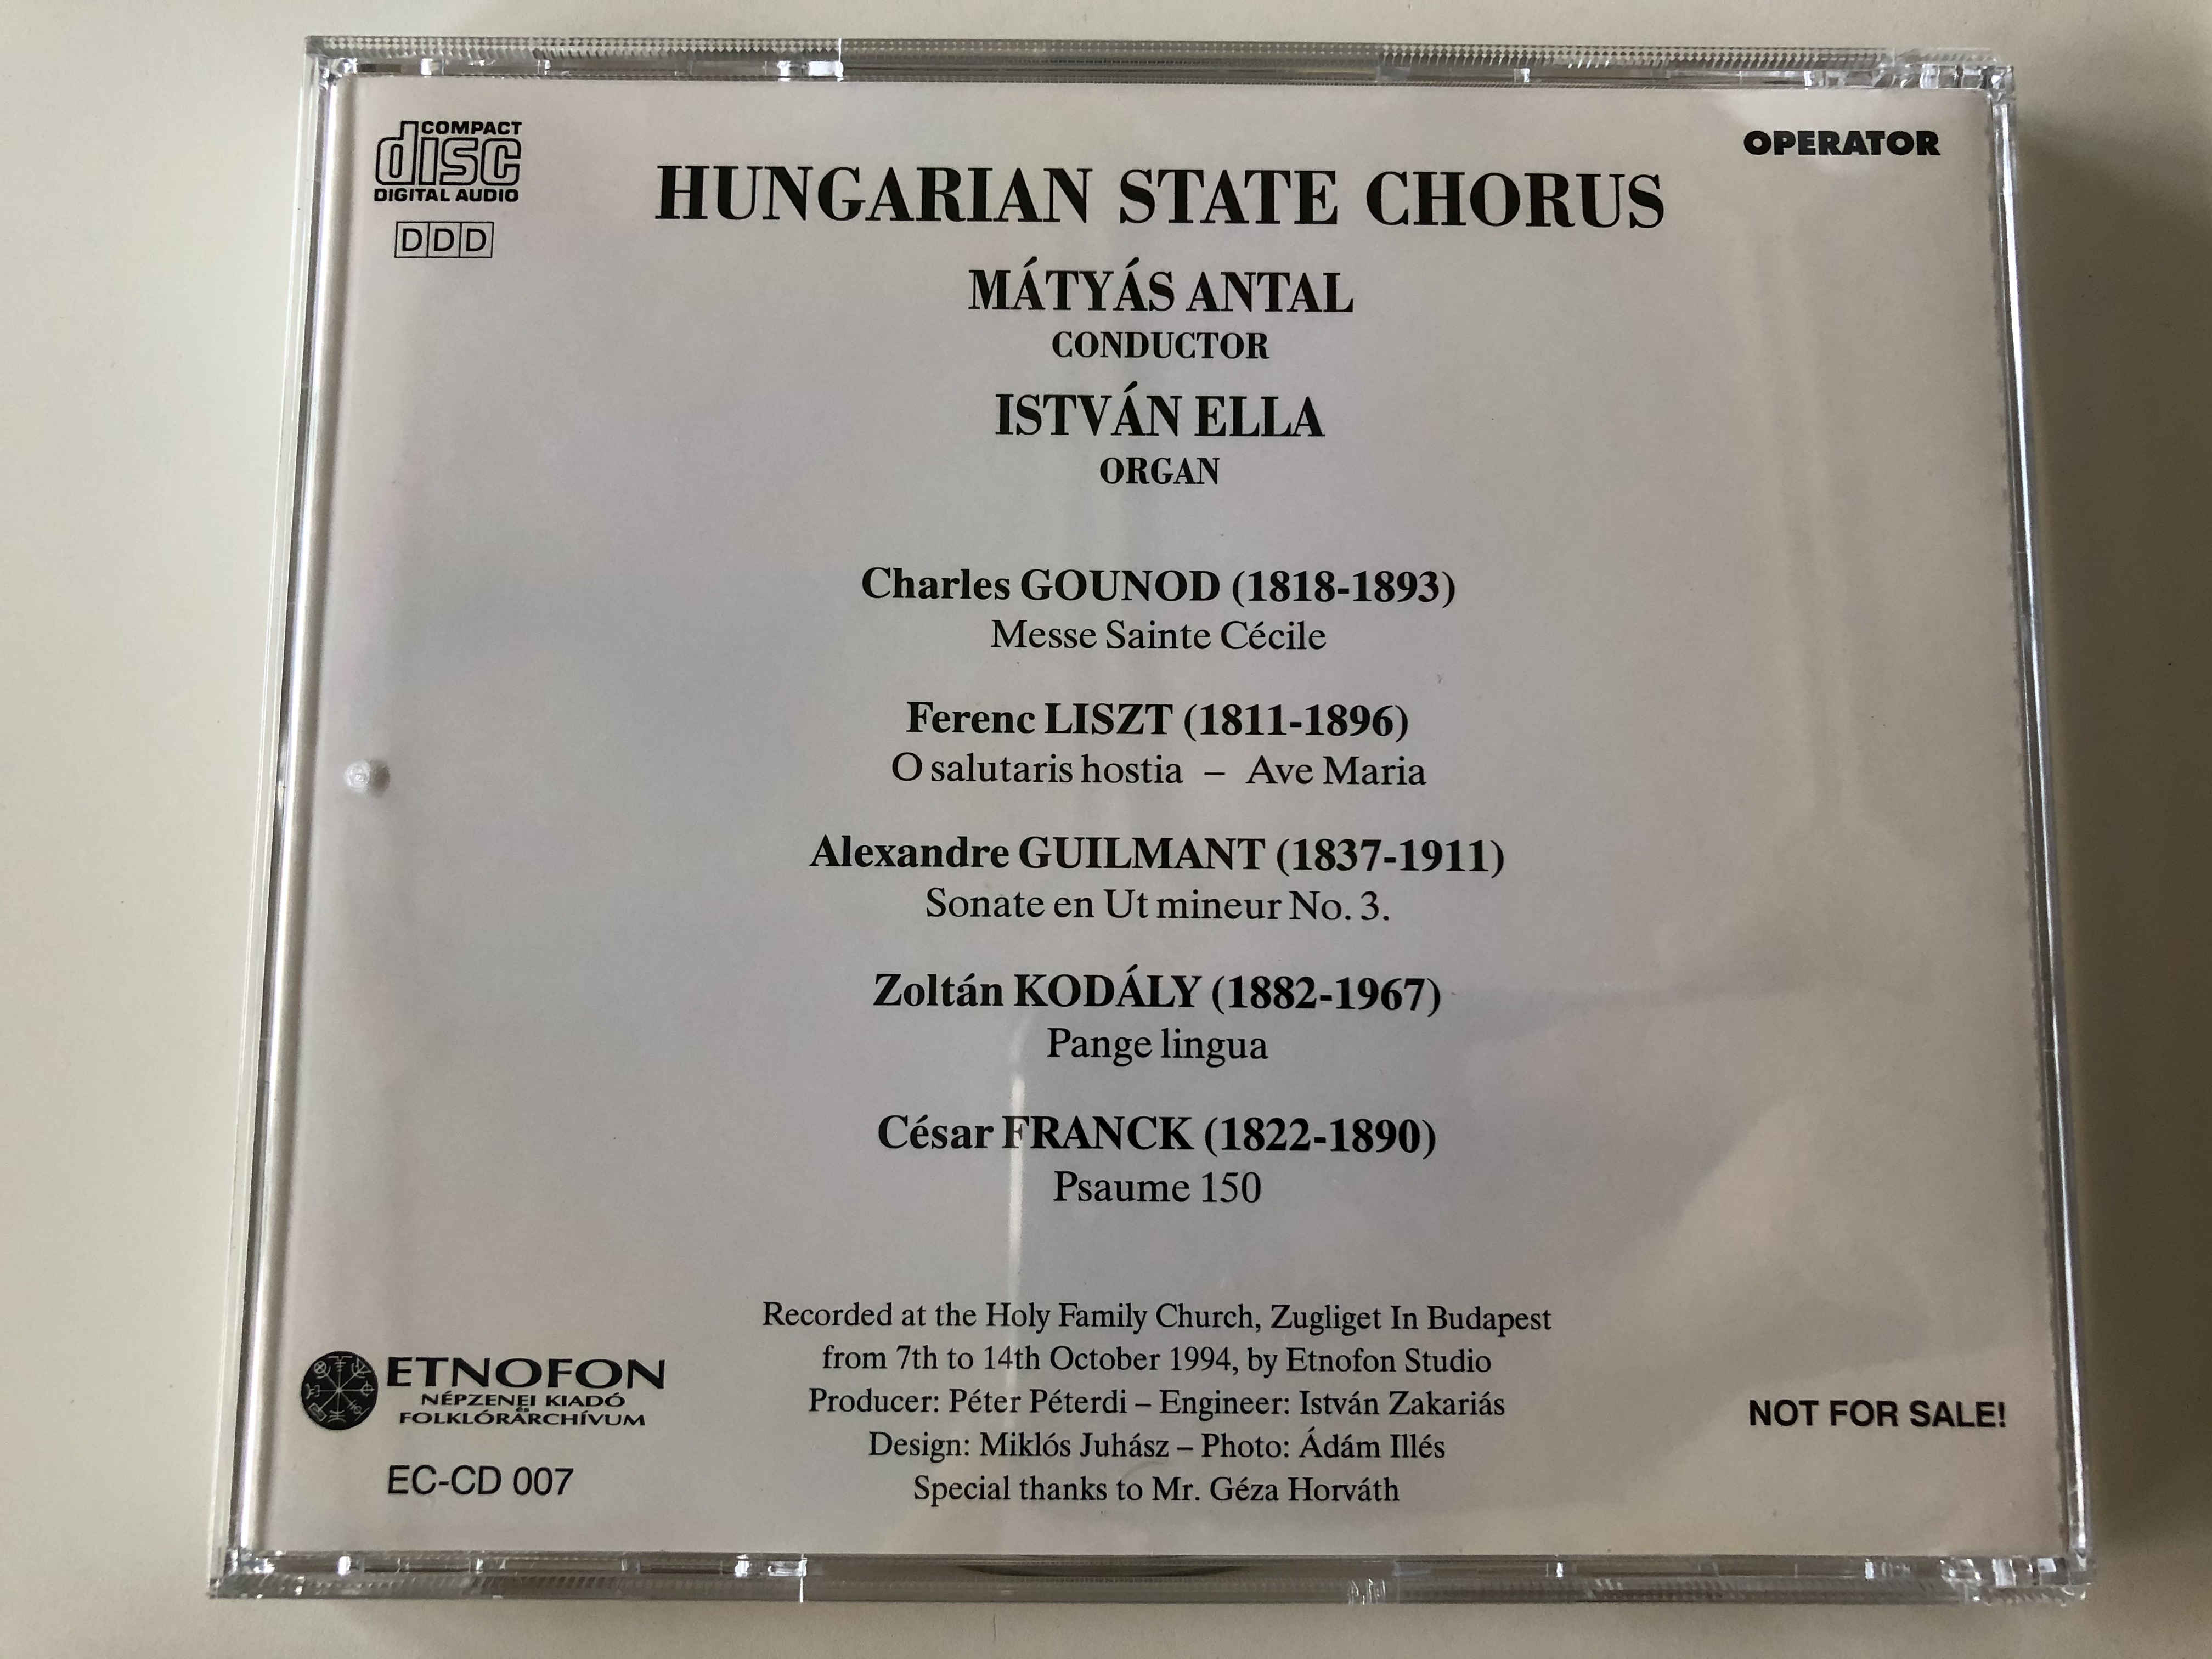 hungarian-state-chorus-istvan-ella-organ-matyas-antal-conductor-gounod-liszt-kodaly-franck-operator-concerto-etnofon-audio-cd-1994-ec-cd-007-7-.jpg